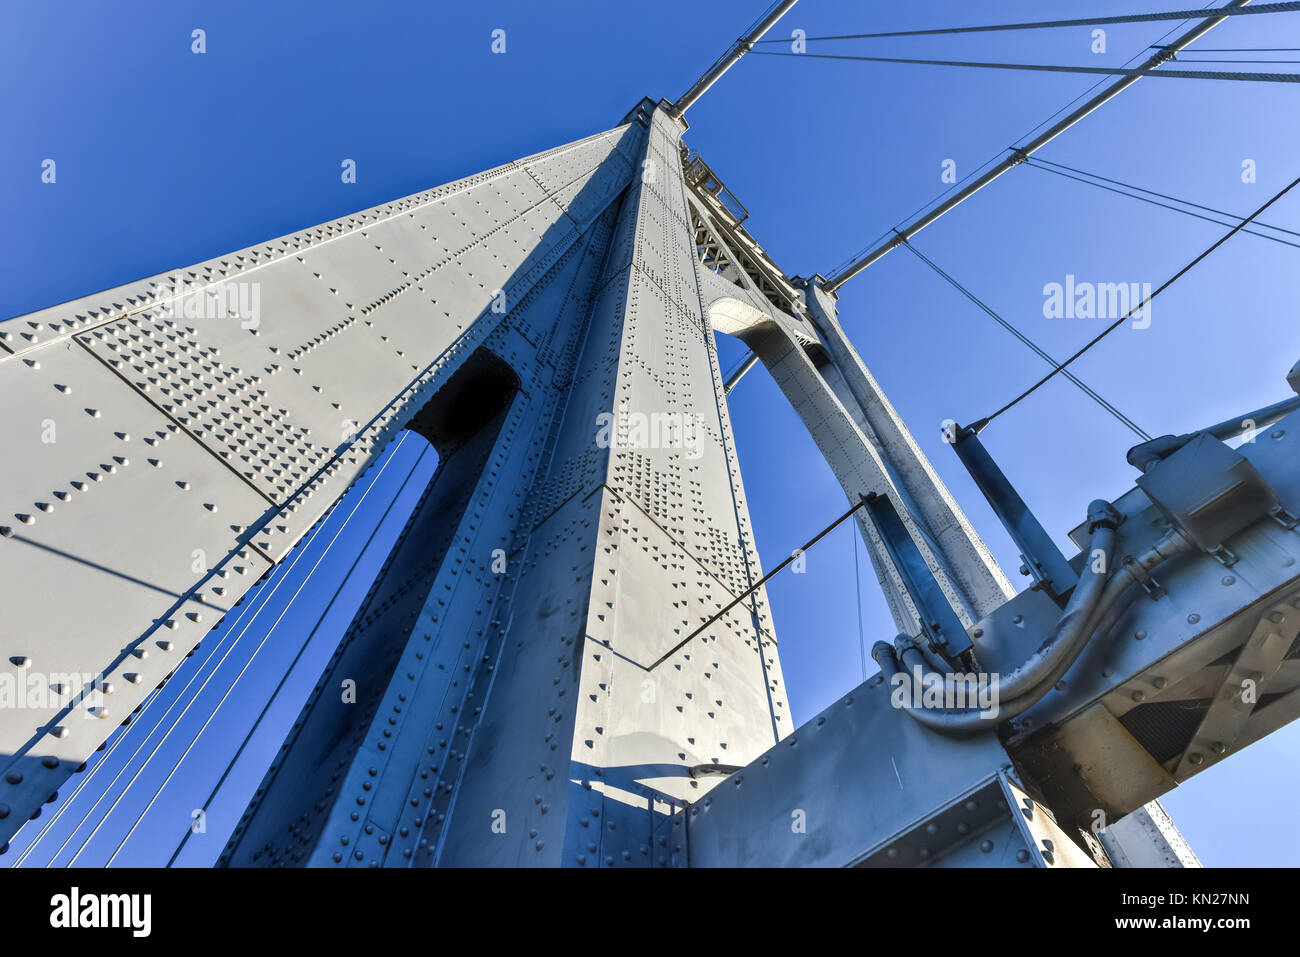 Mid-Hudson ponte che attraversa il fiume Hudson in Poughkeepsie, New York Foto Stock